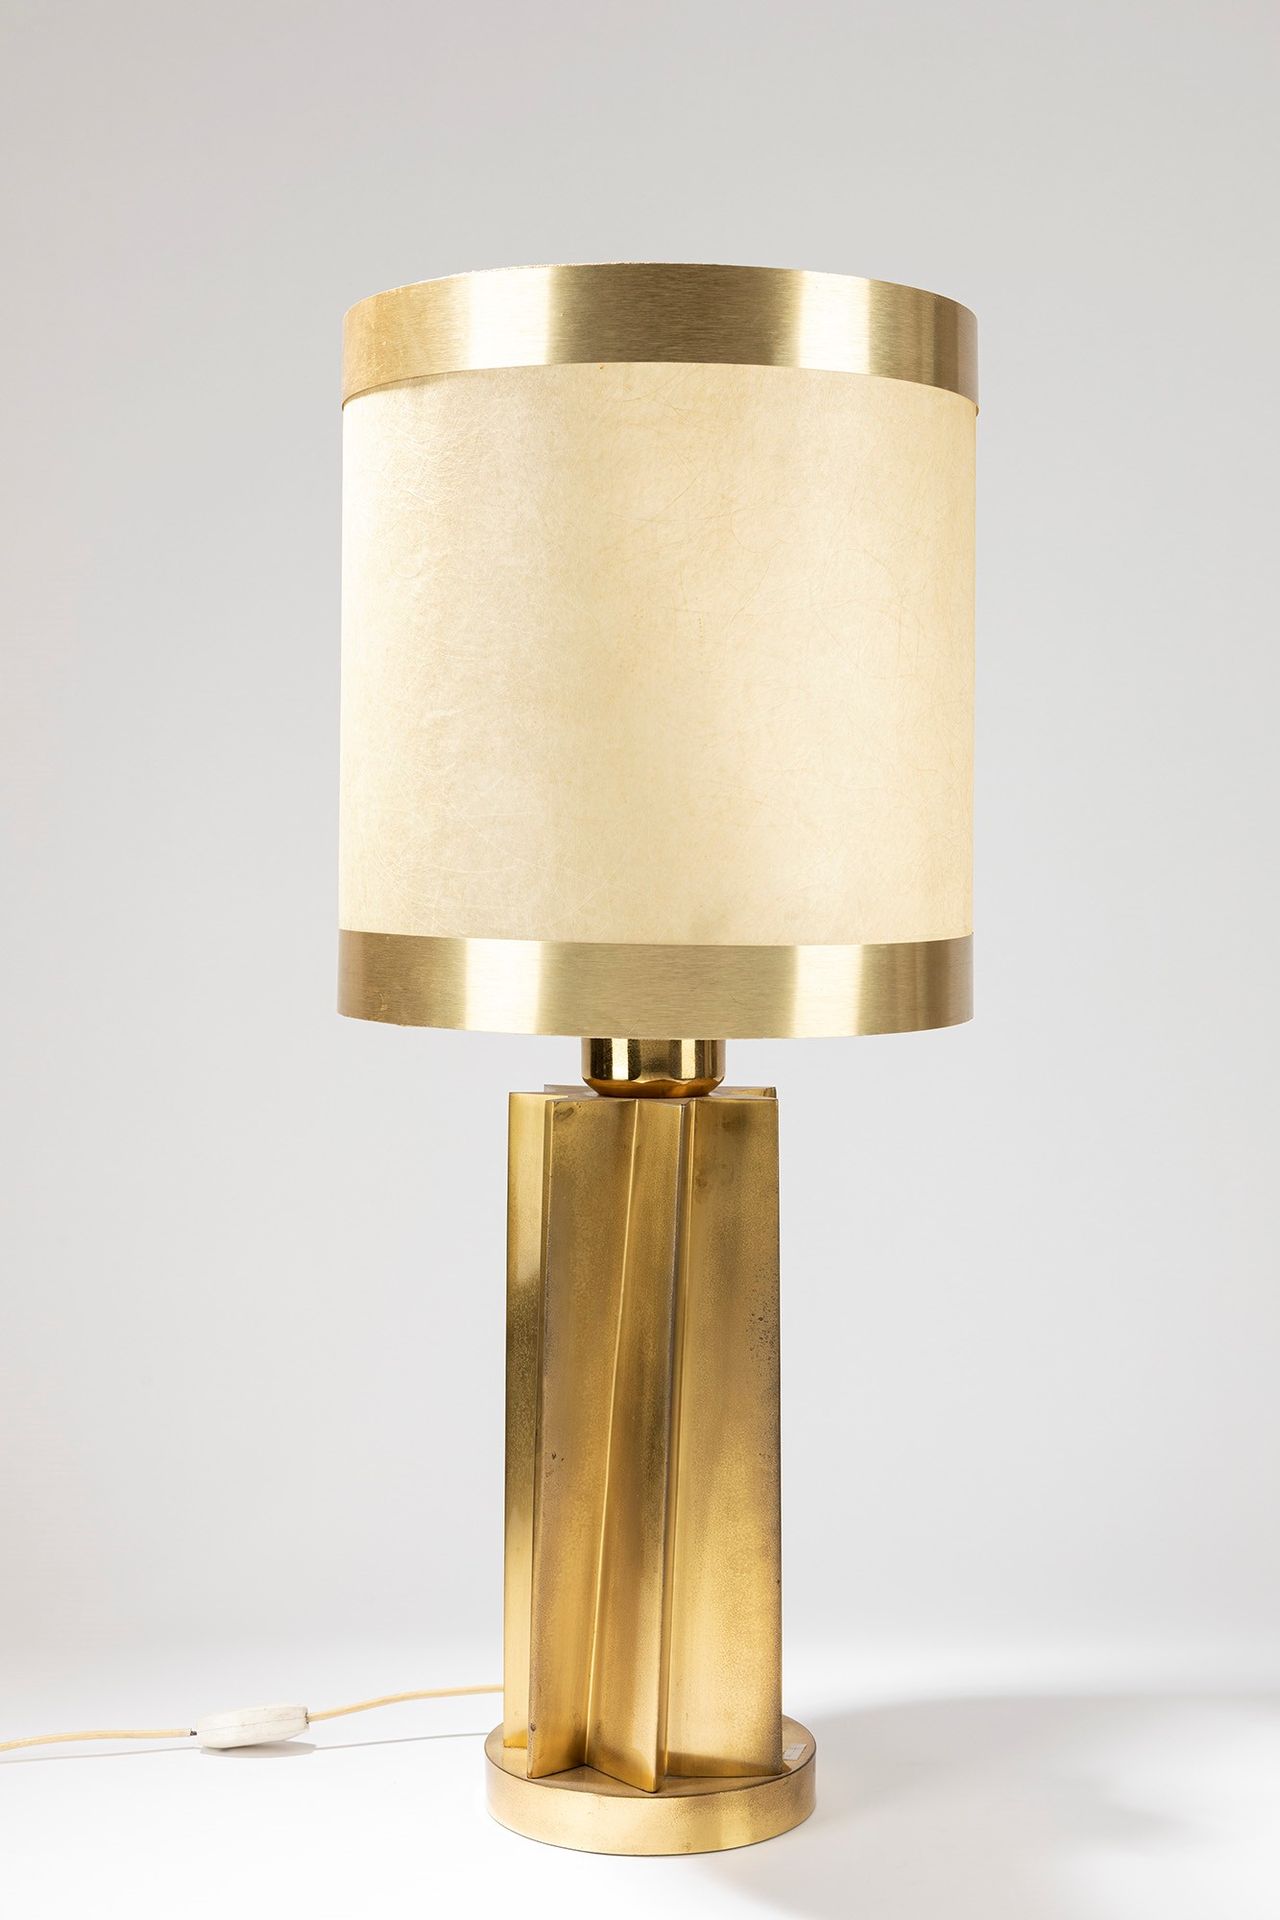 ITALIAN MANUFACTURE Table lamp, 1970 ca.

Cm h 89 x dm 37
brass.